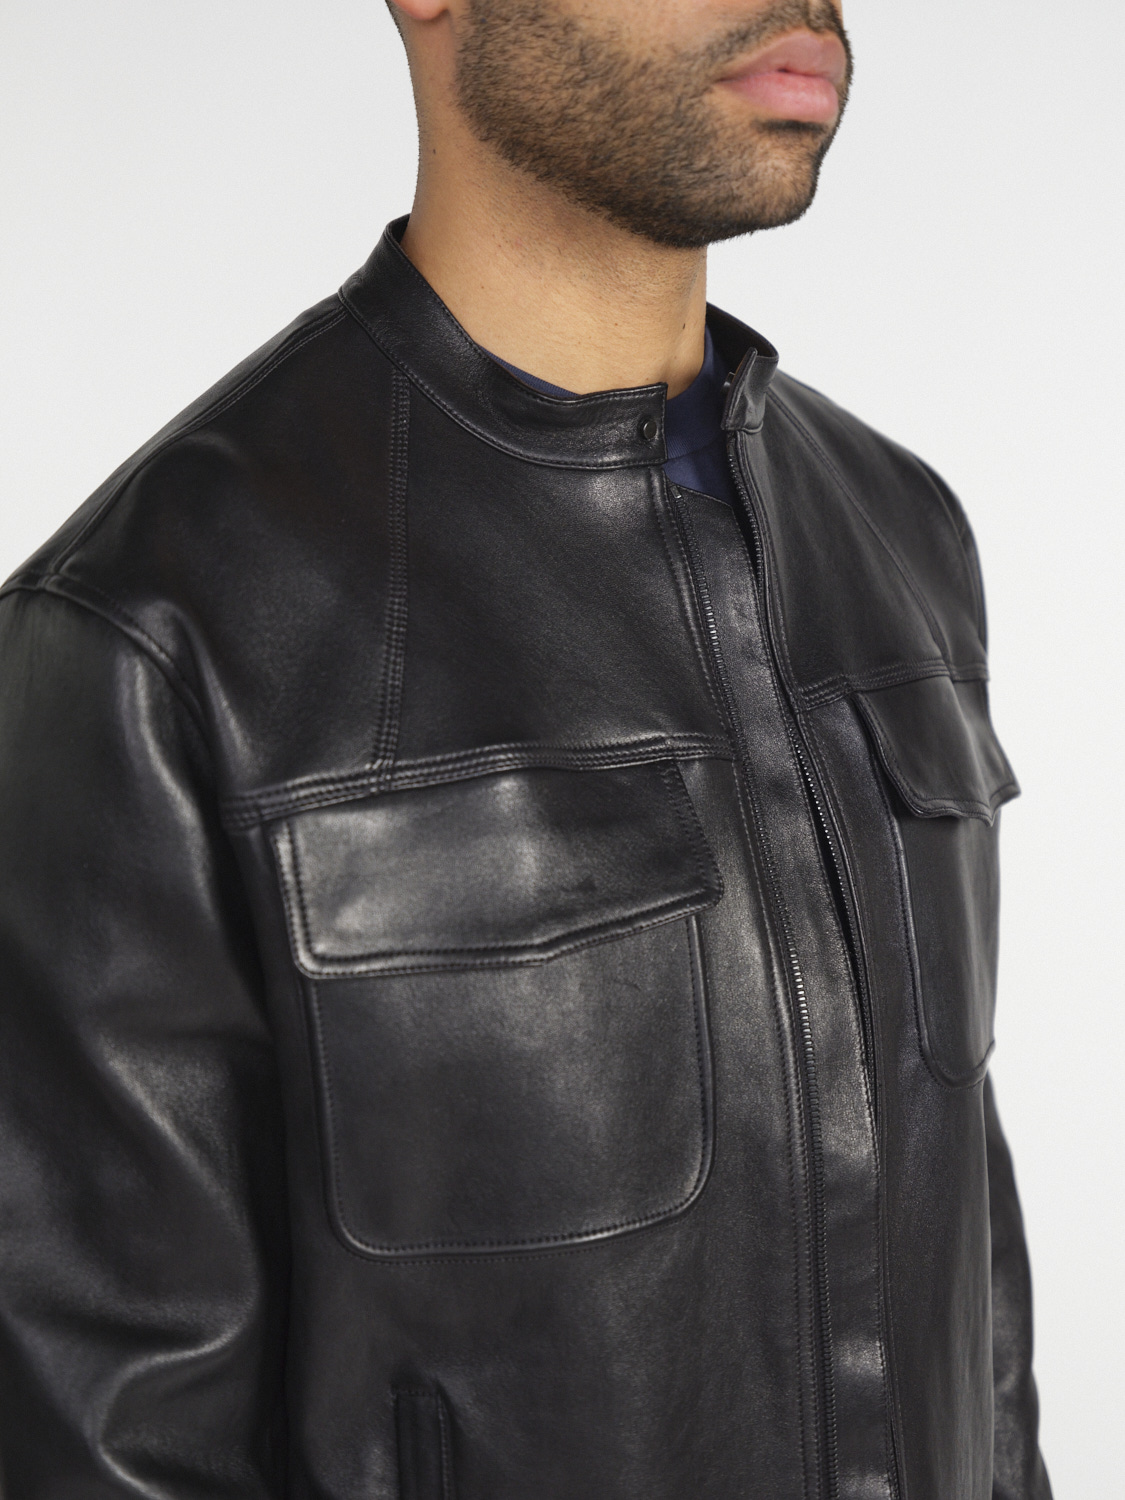 jitrois Blouson Angel – leather shirt jacket  black 52